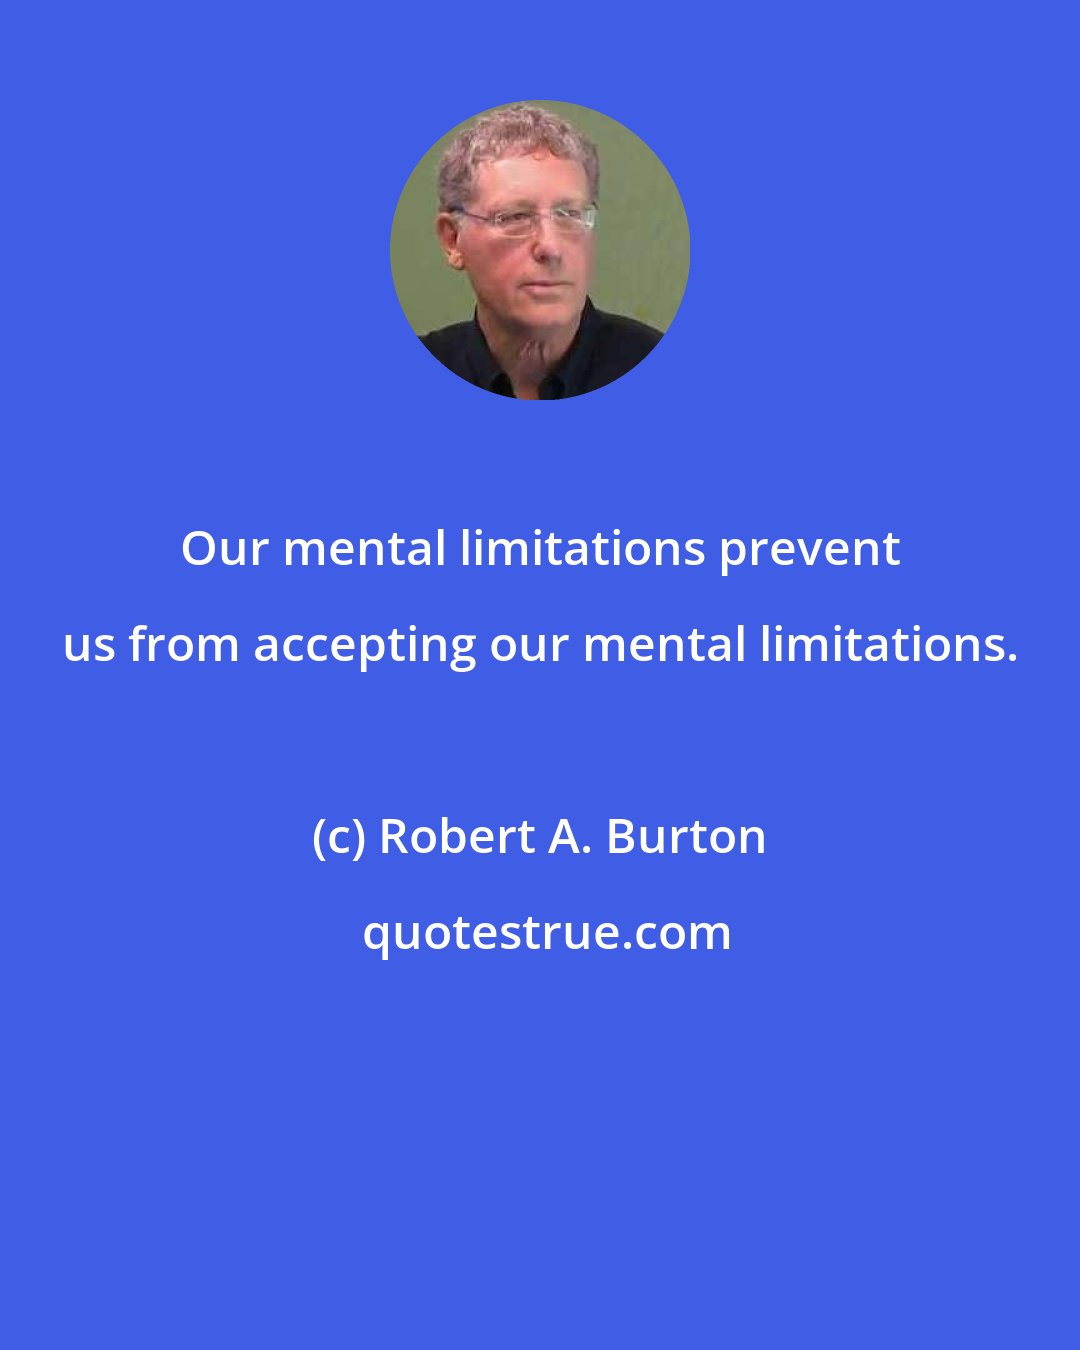 Robert A. Burton: Our mental limitations prevent us from accepting our mental limitations.